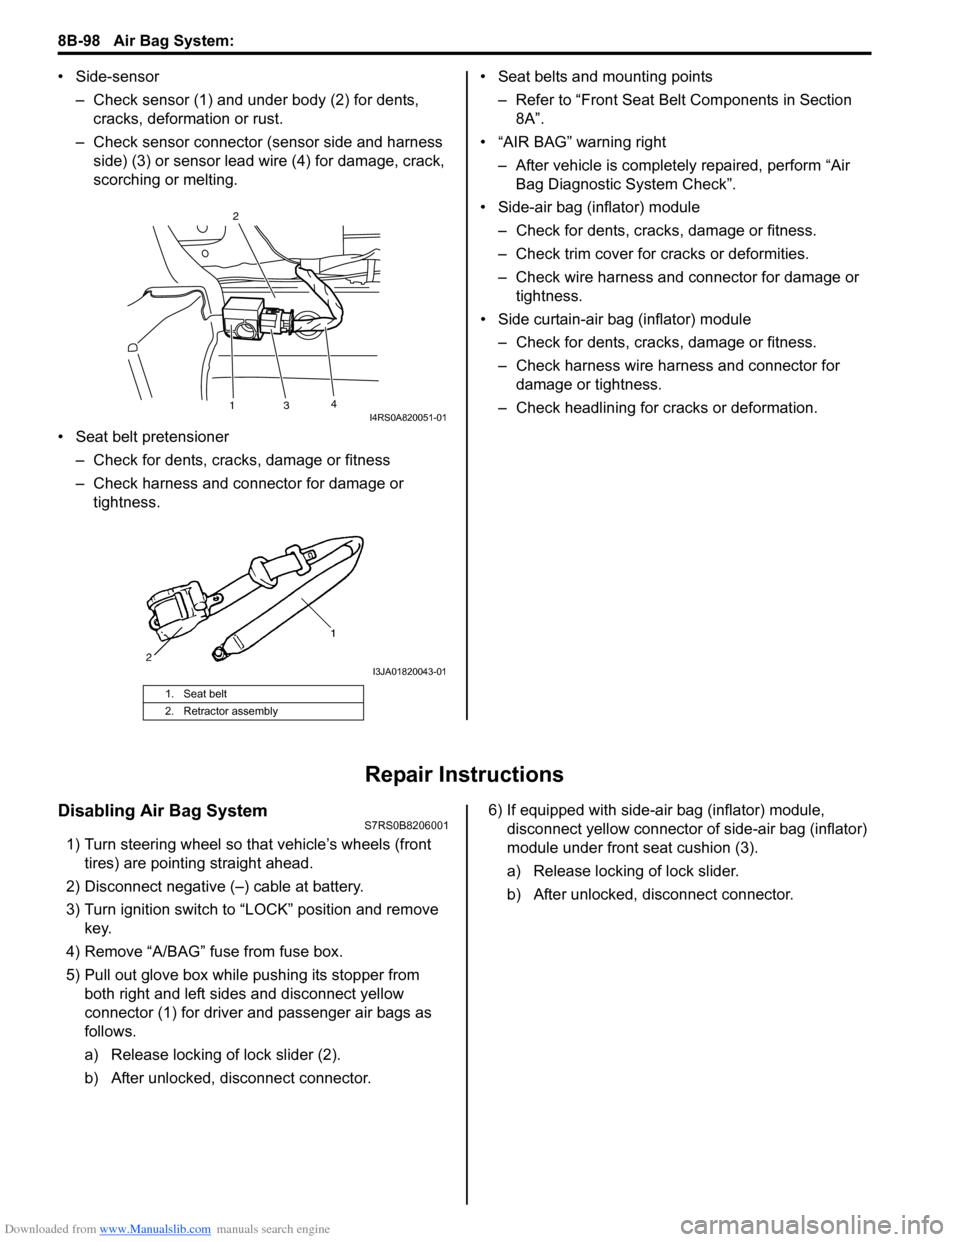 SUZUKI SWIFT 2008 2.G Service Workshop Manual Downloaded from www.Manualslib.com manuals search engine 8B-98 Air Bag System: 
• Side-sensor– Check sensor (1) and under body (2) for dents, cracks, deformation or rust.
– Check sensor connecto